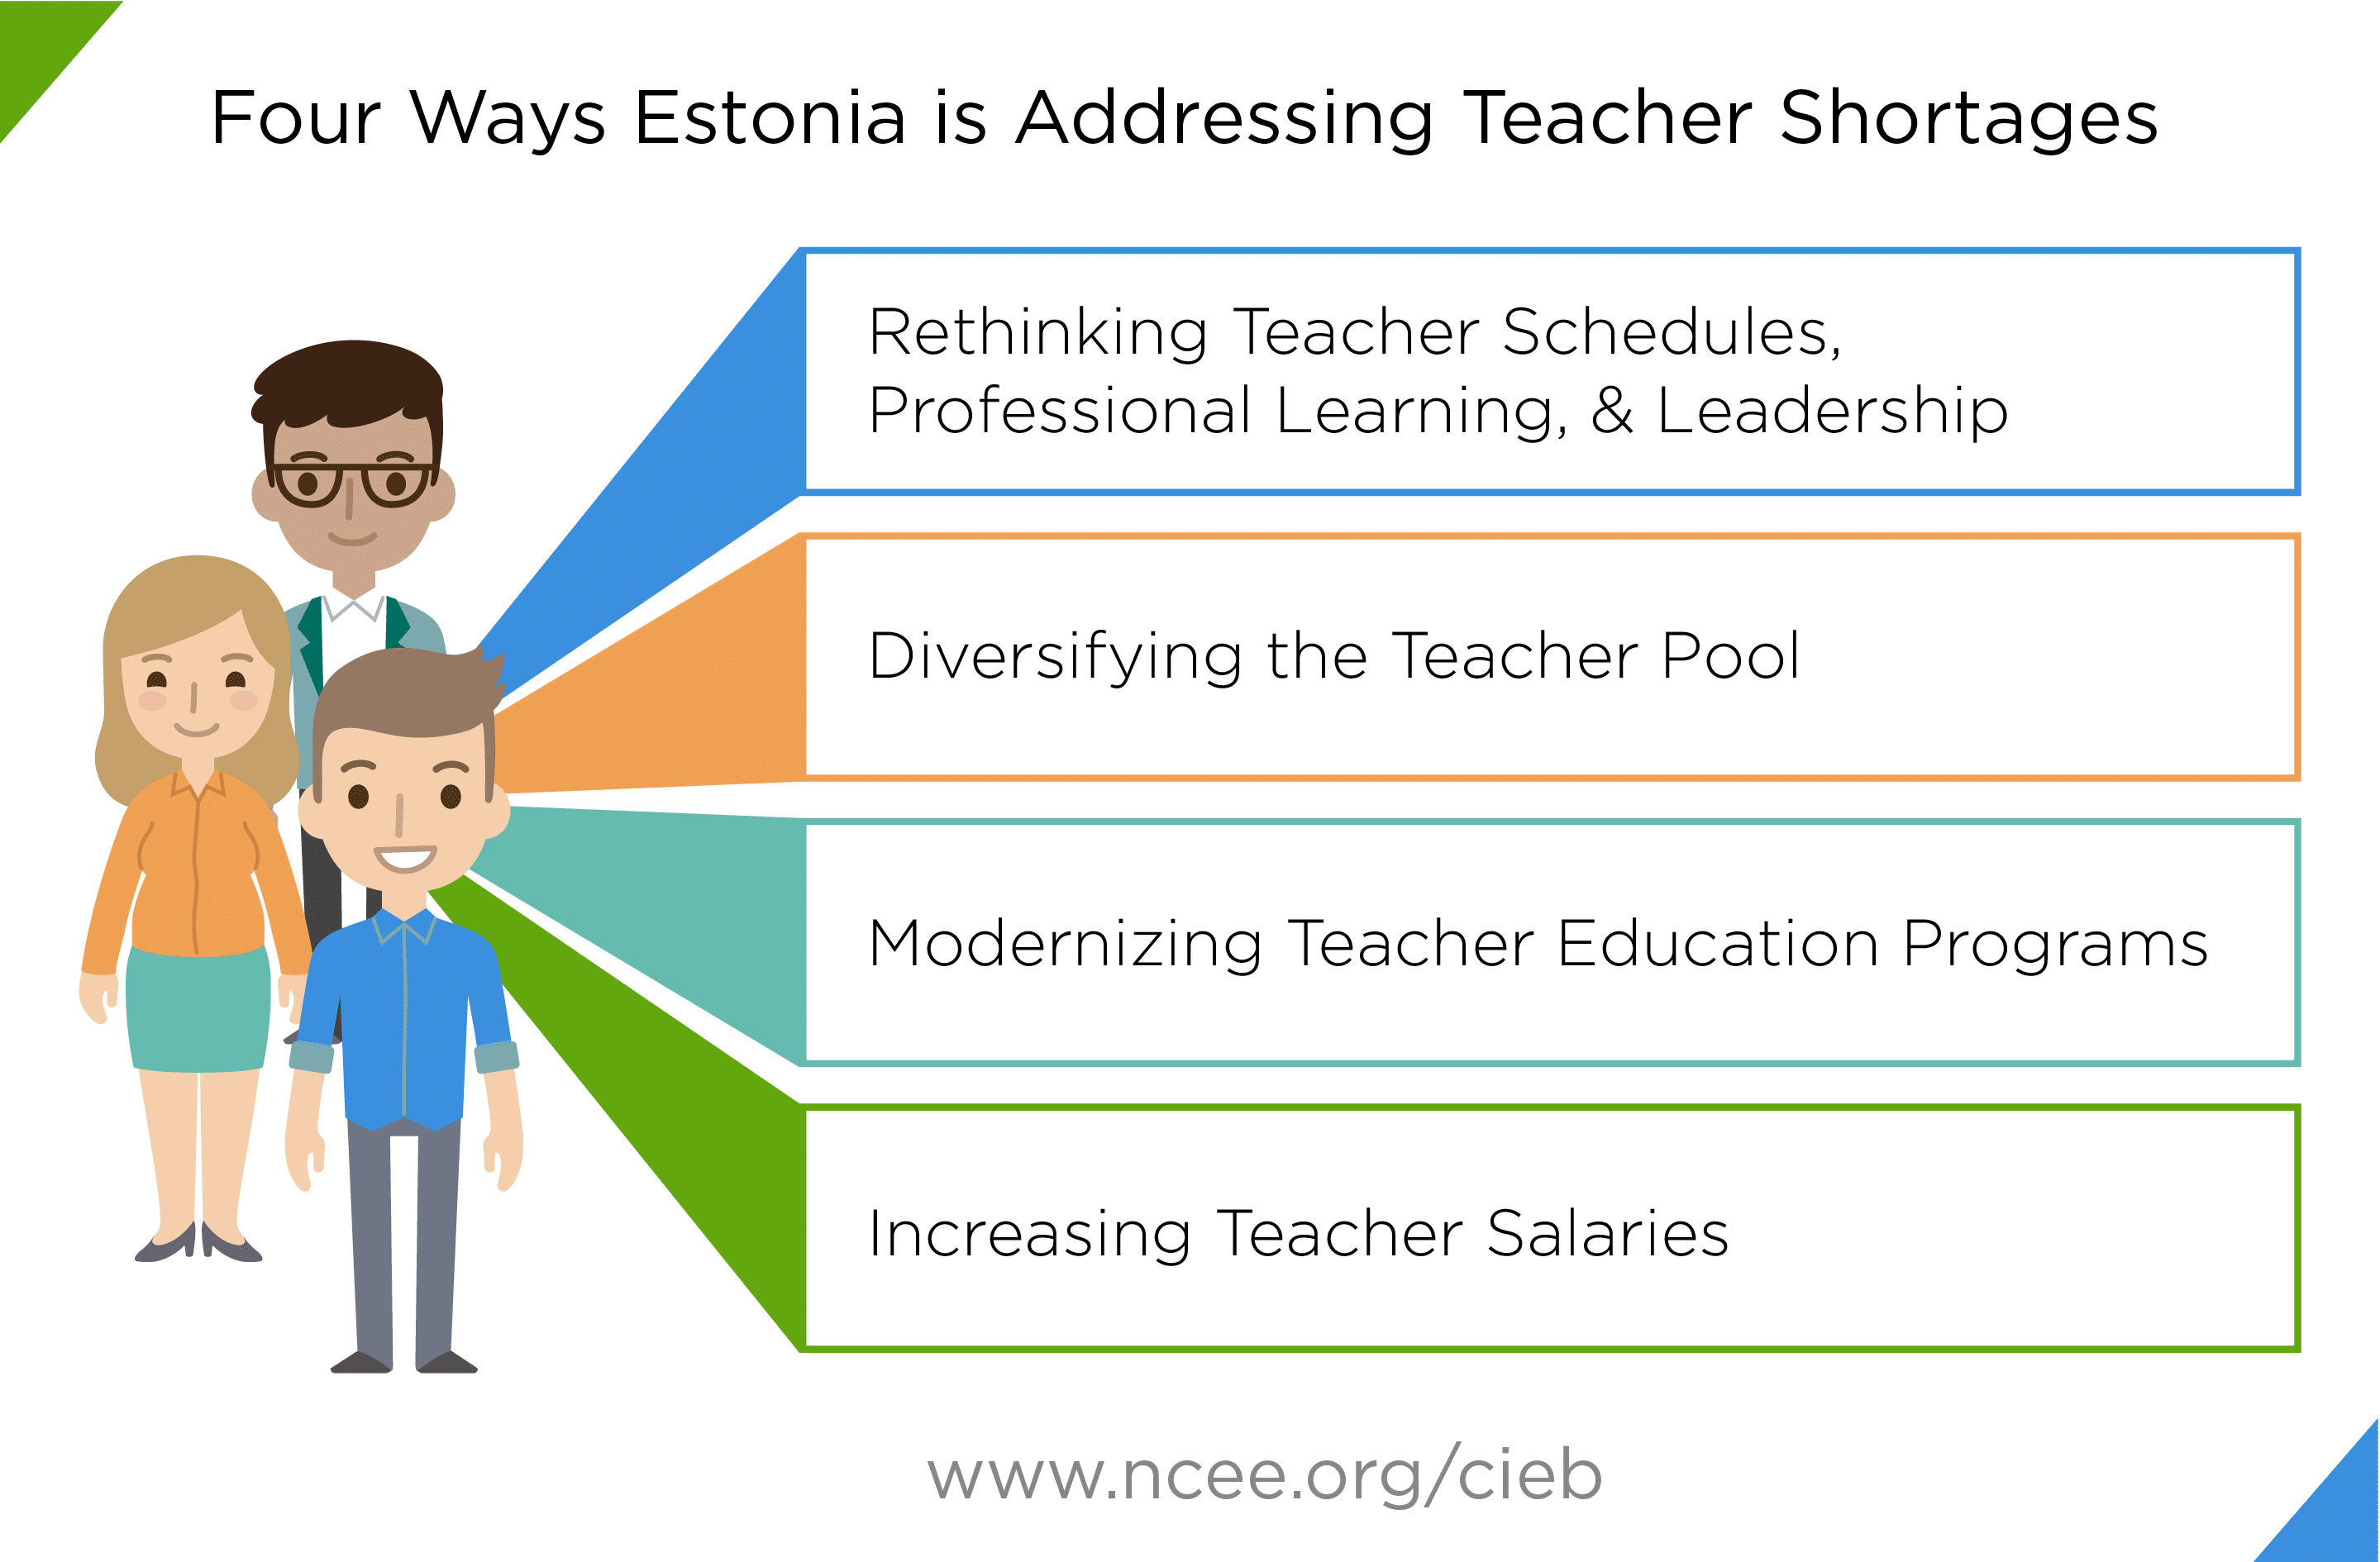 Four Ways Estonia is Addressing Teacher Shortages